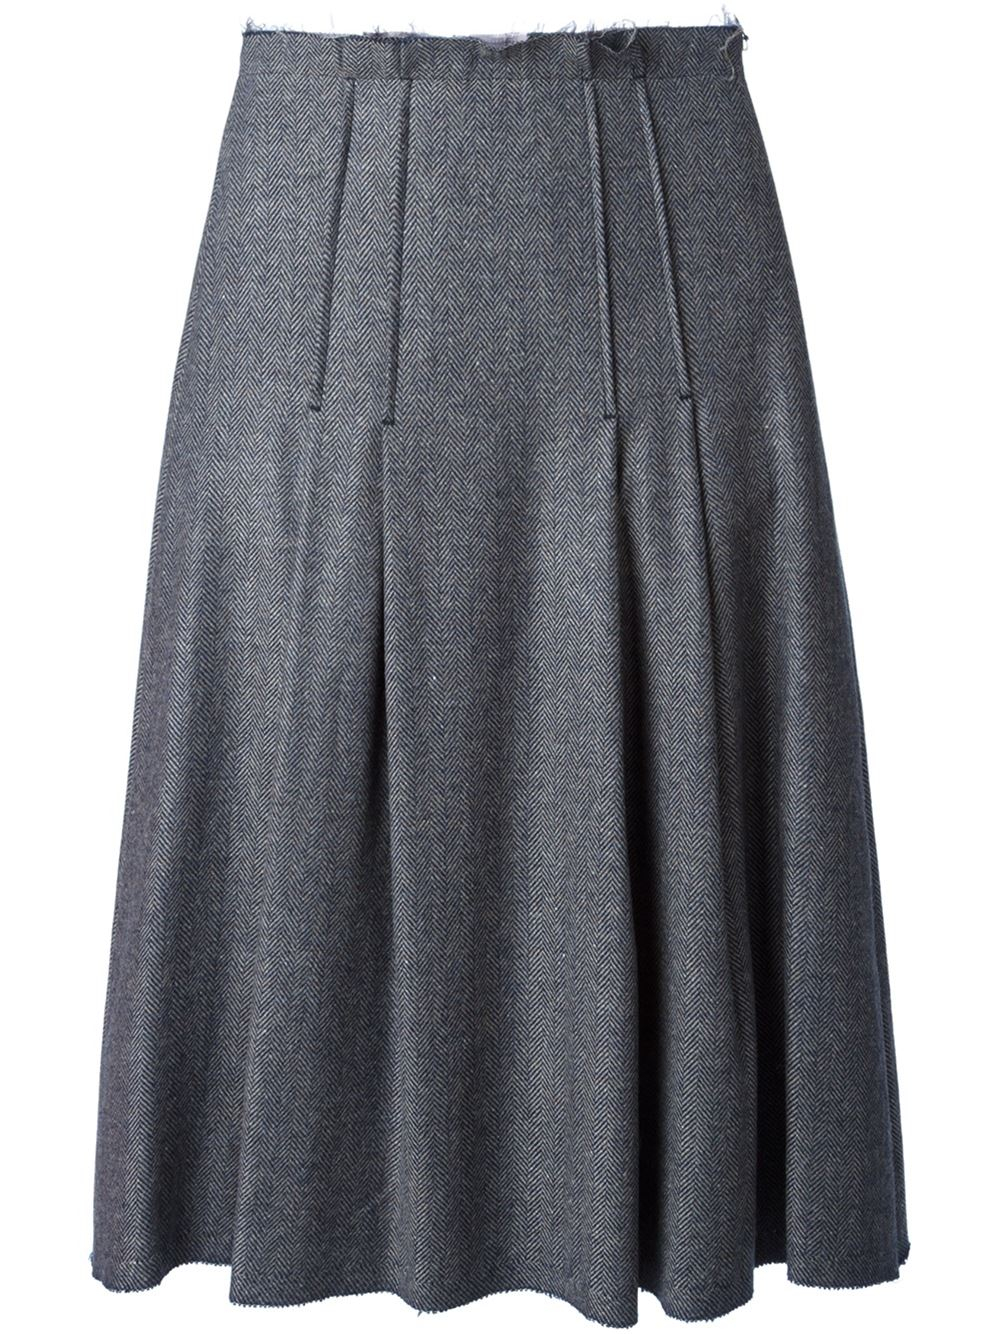 Lyst - Erika Cavallini Semi Couture Pleated Godet Hem Skirt in Gray